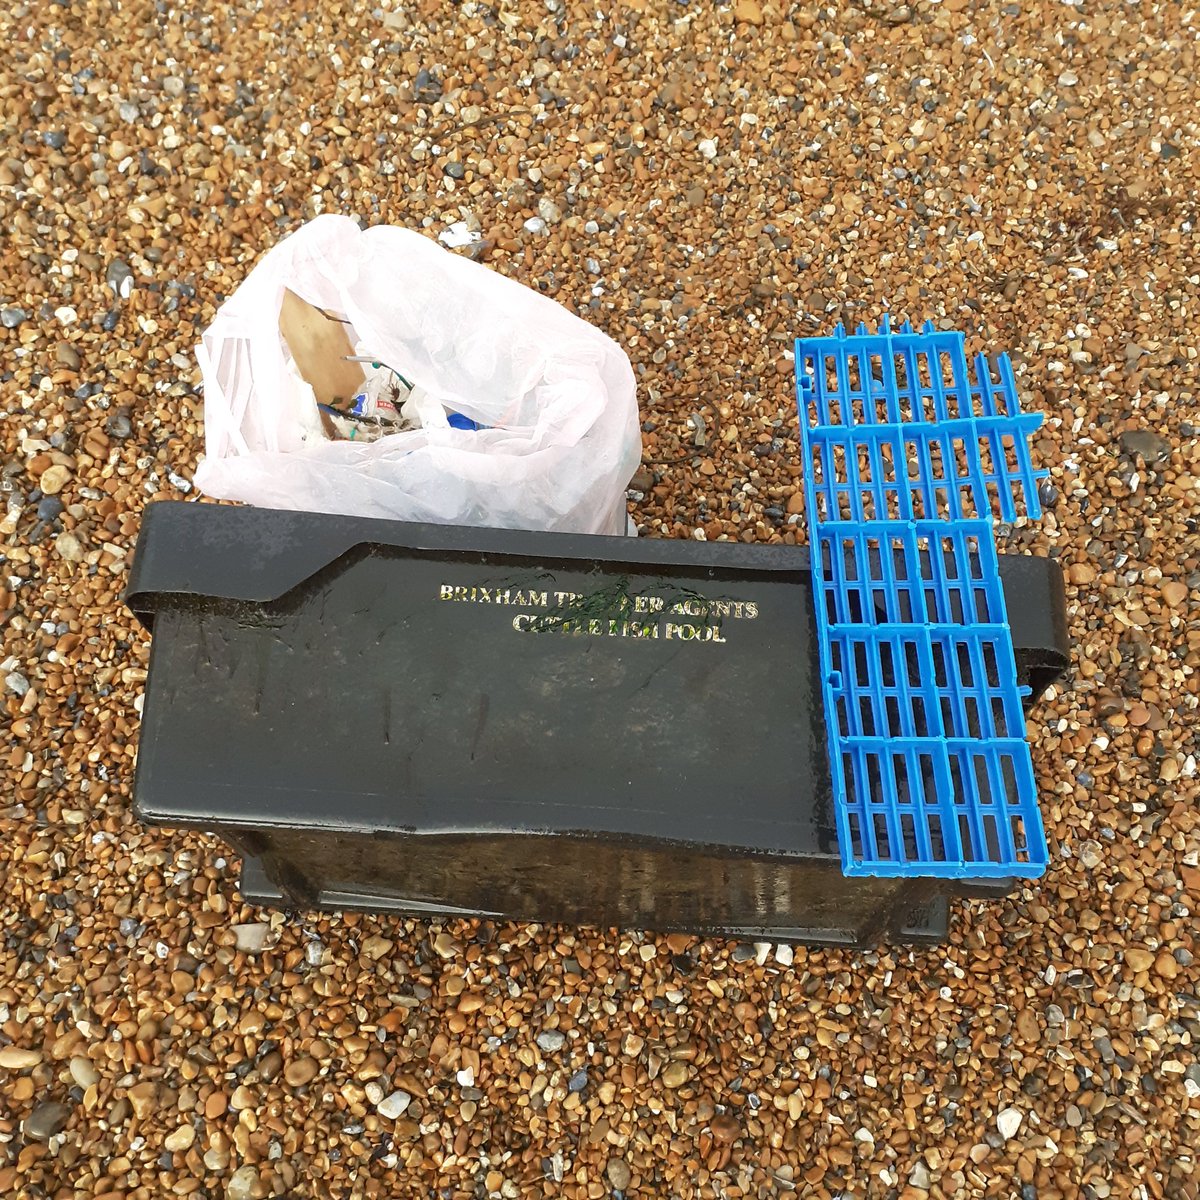 Hey @Brixhamfishmkt do you want your cuttlefish pool crate back?  The marine life really don't want it,
 
Regards, Hastings

#plasticpollution #fishingwaste #hastings #brixham